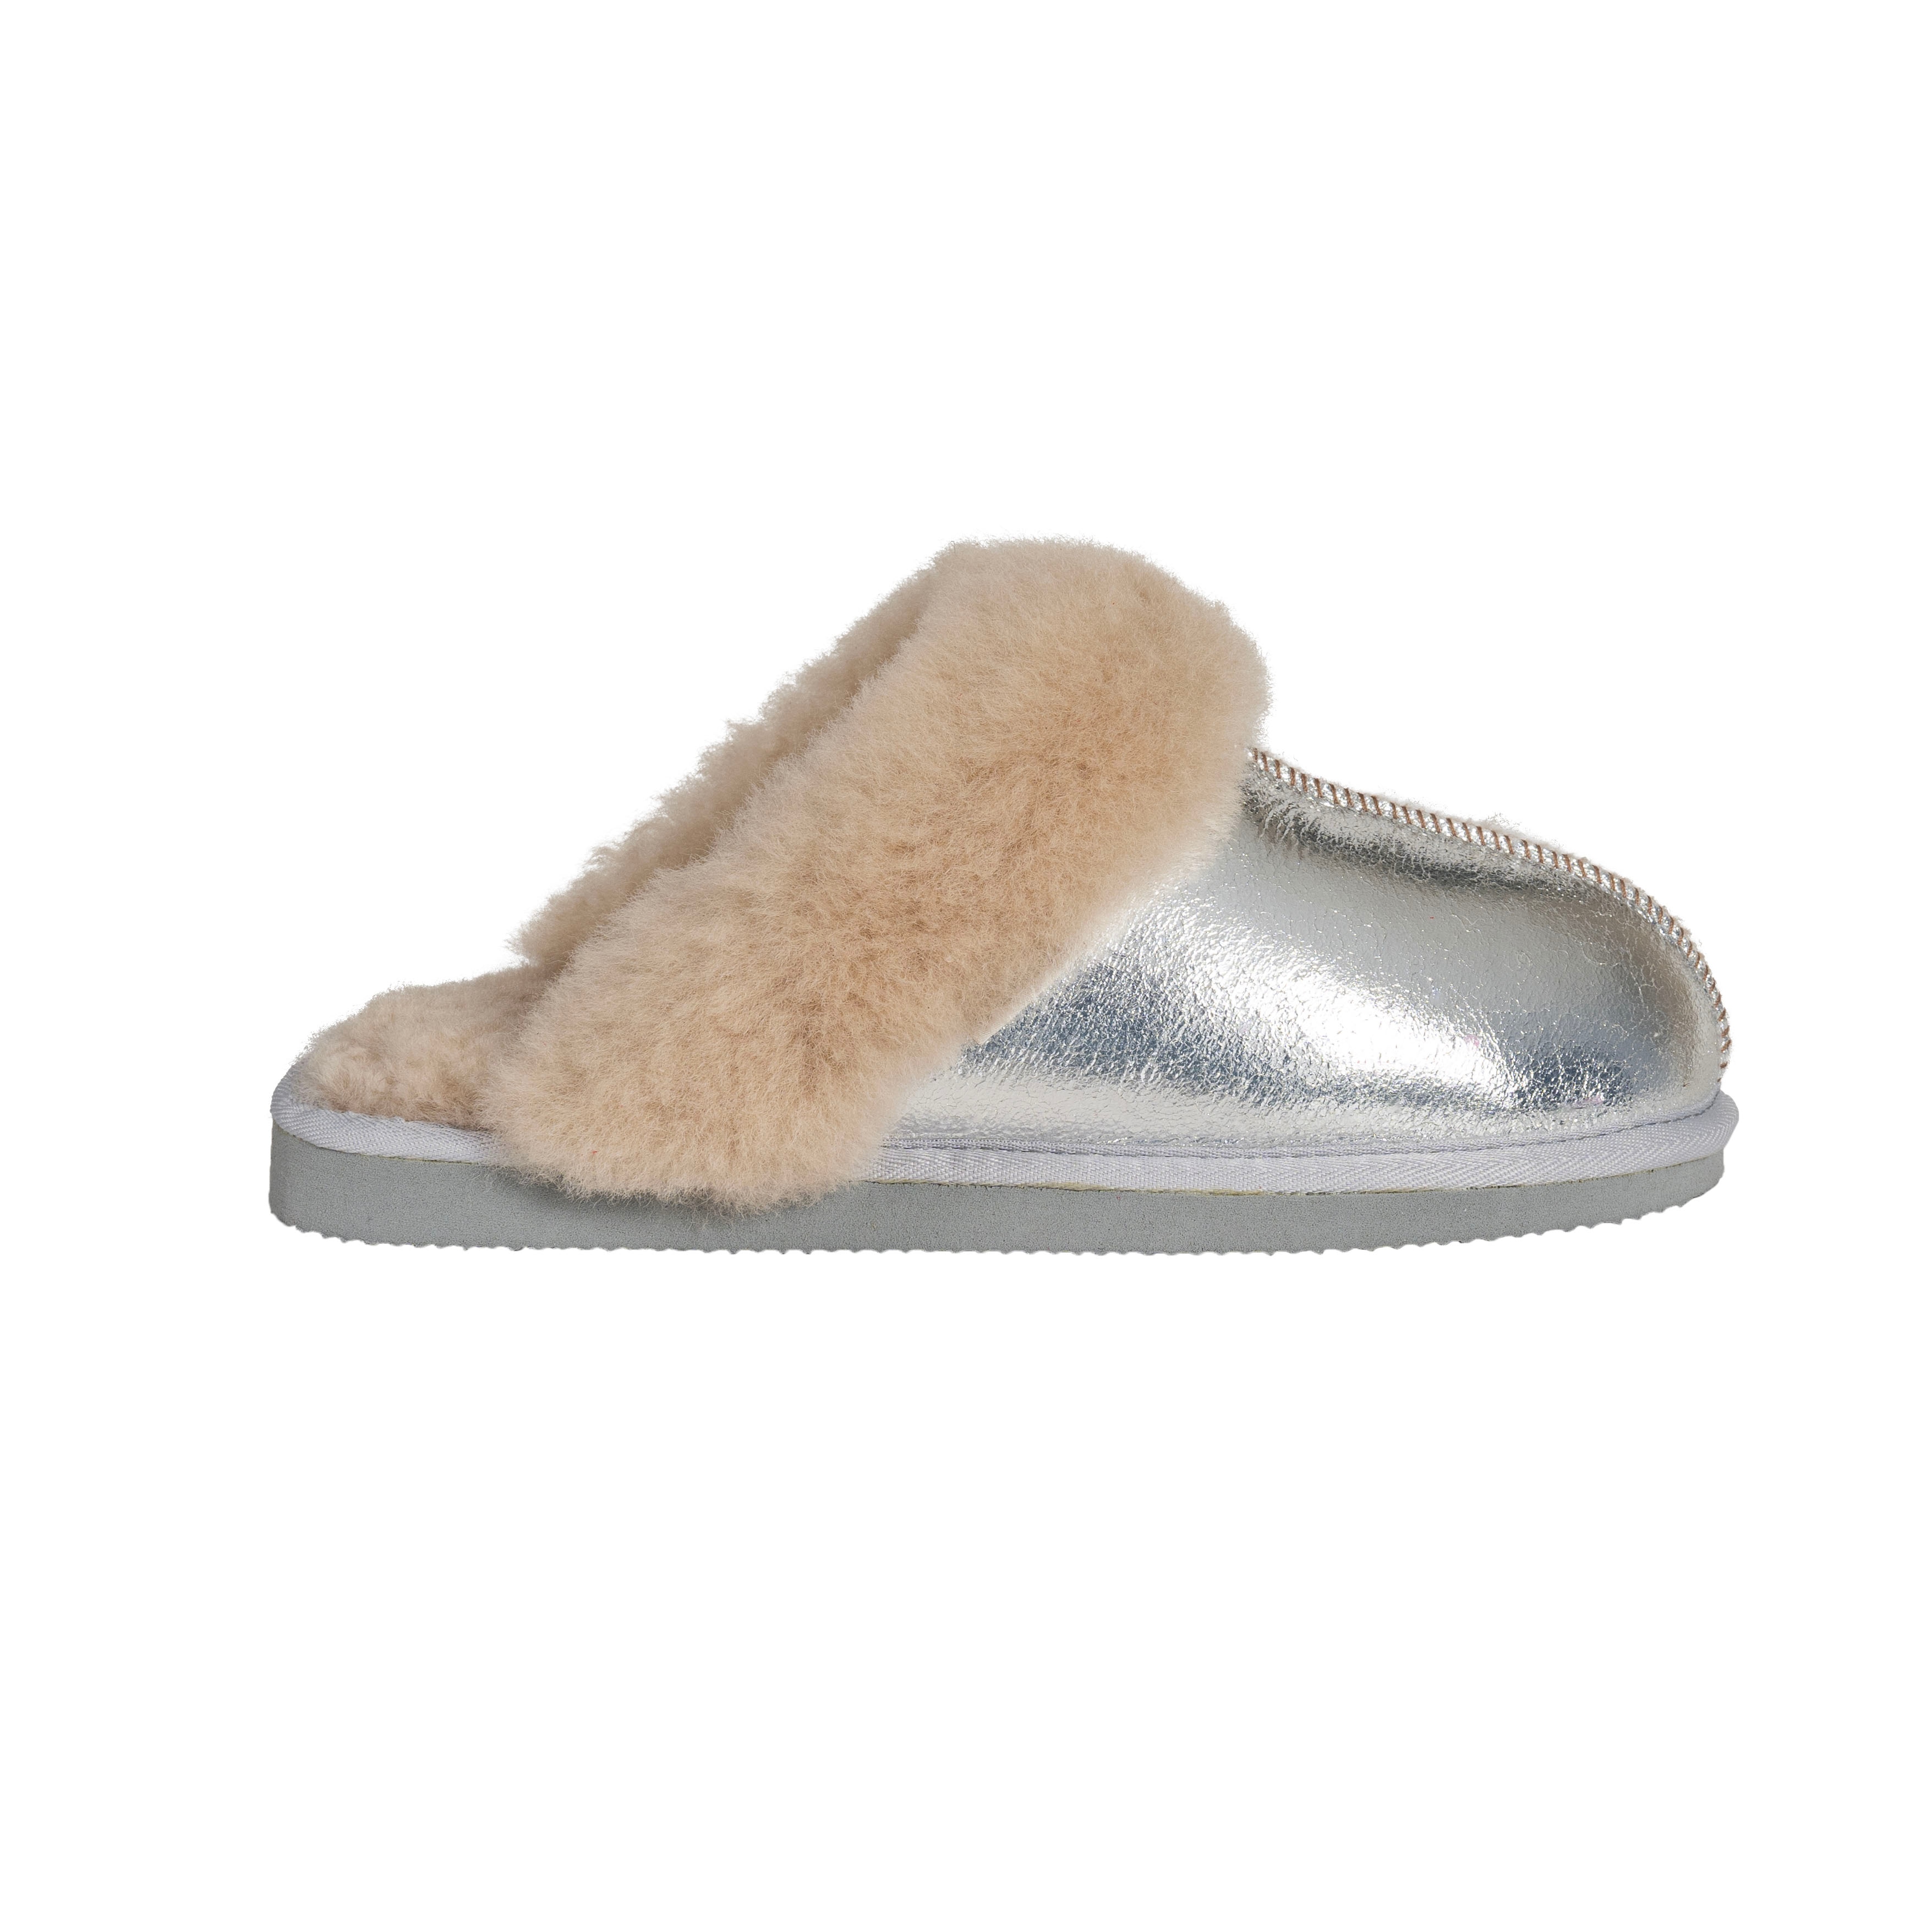 Jessica slippers